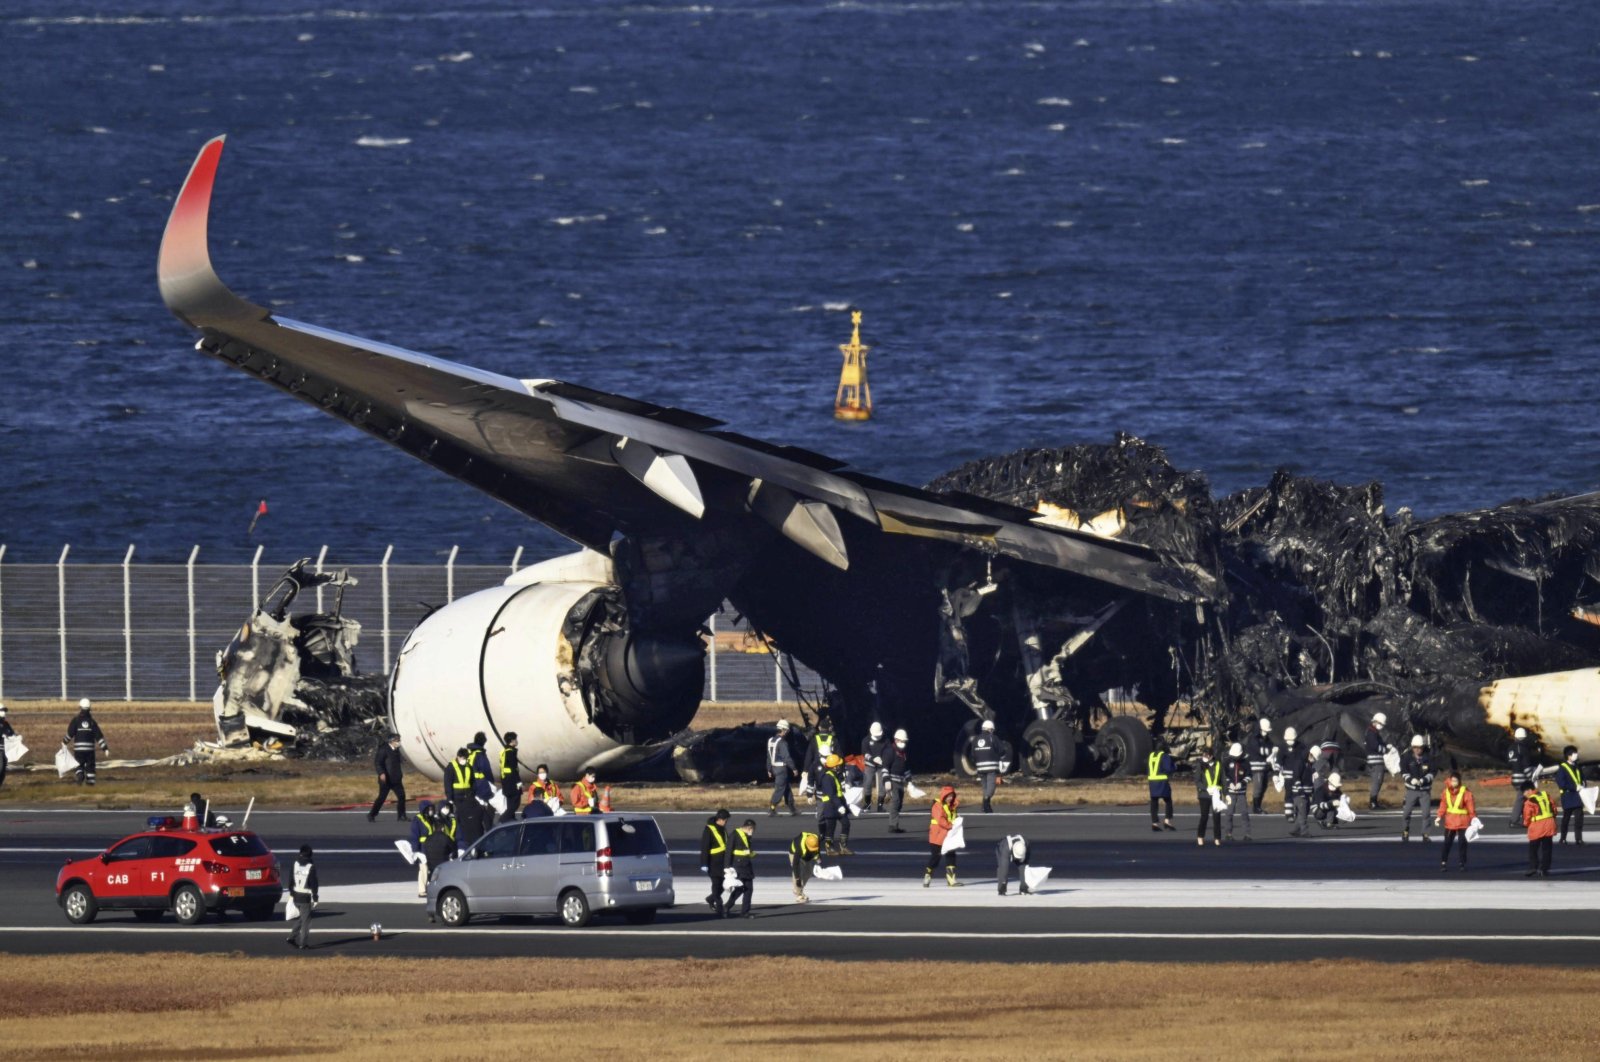 The burned Japan Airlines plane is seen at the Haneda airport in Tokyo, Japan, Jan. 4, 2024. (AP Photo)